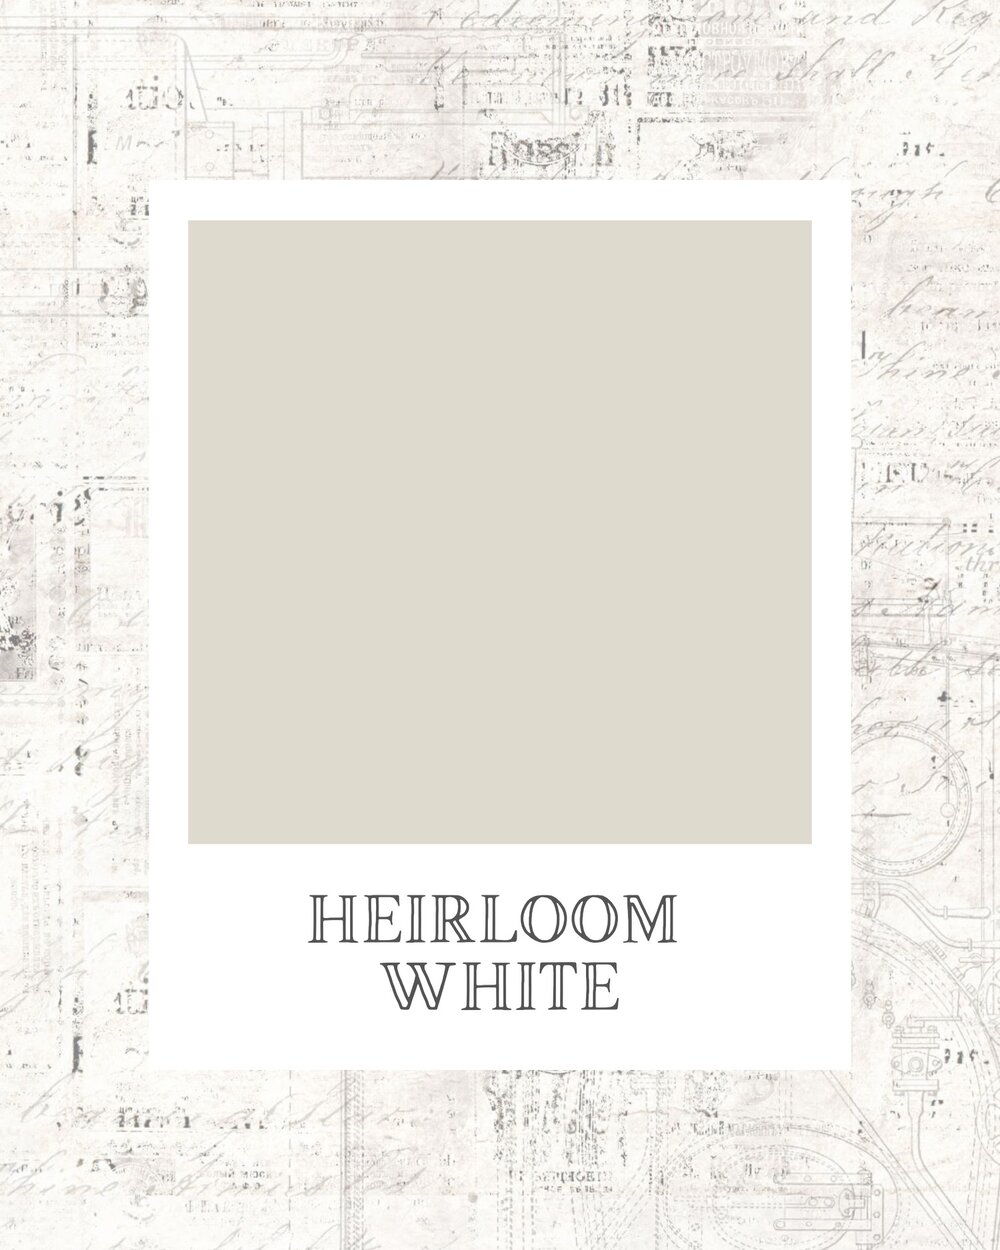 ONE: Heirloom White — Melange paints